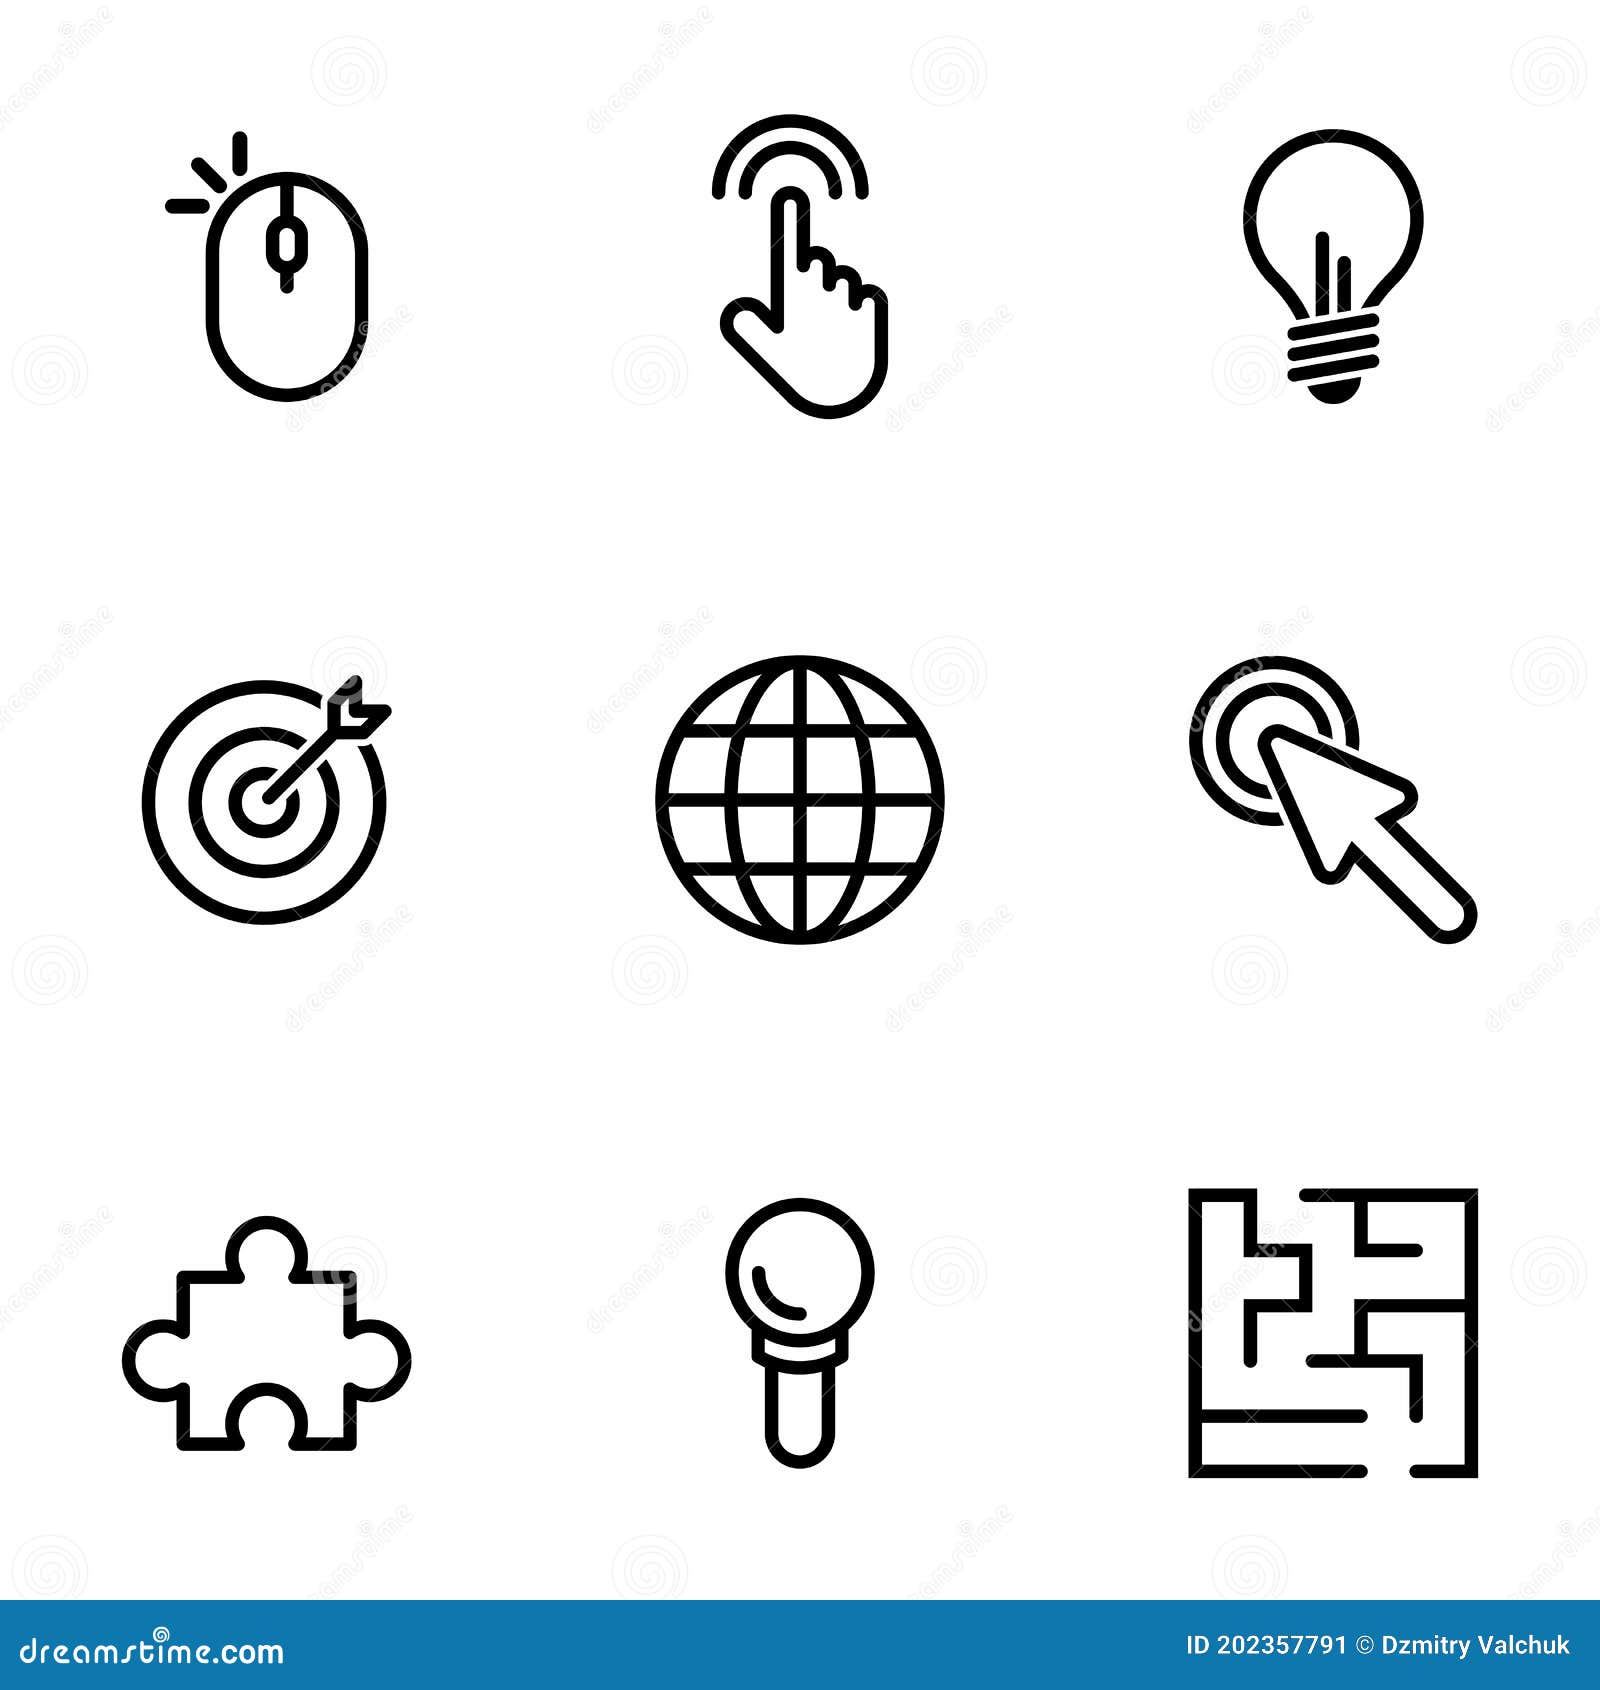 simple  icons. flat  on a theme internet, communication, creativity, purposefulness